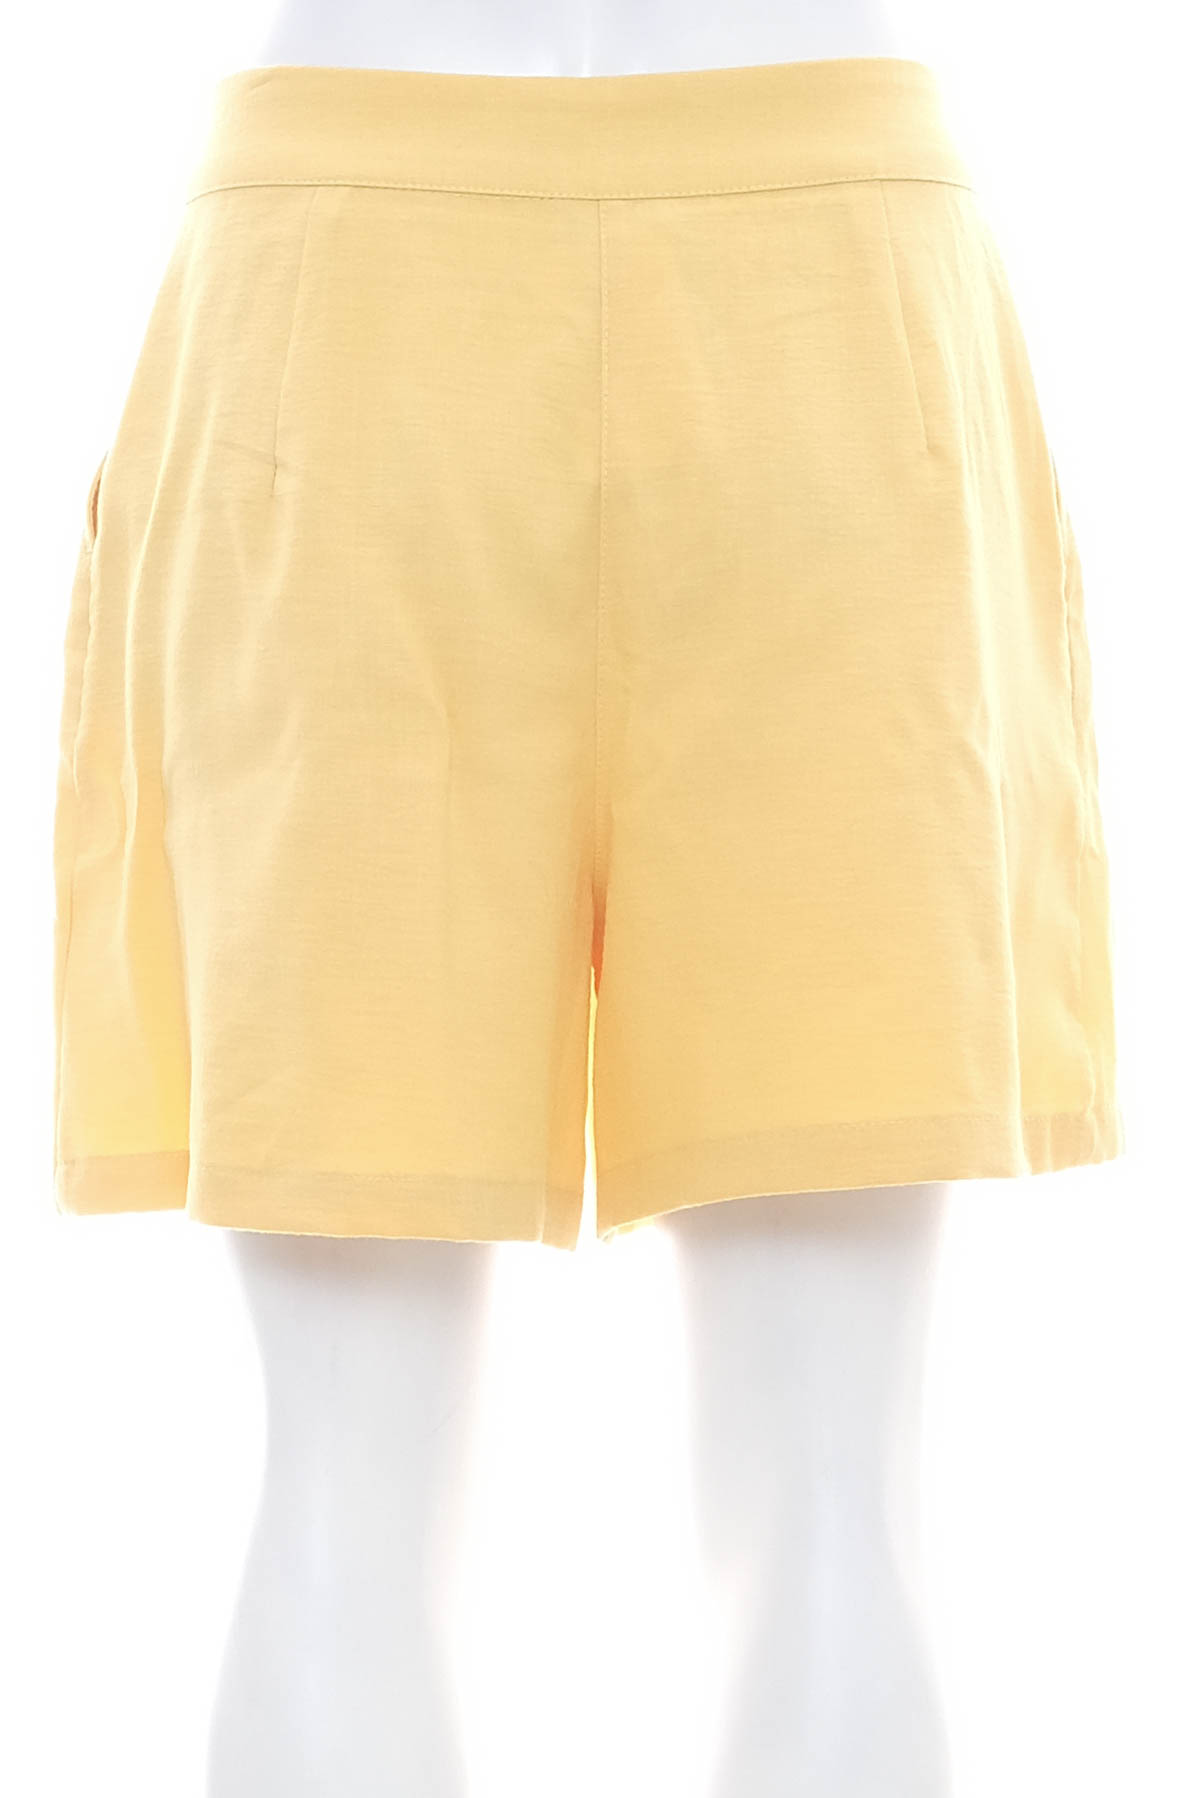 Female shorts - Bershka - 1